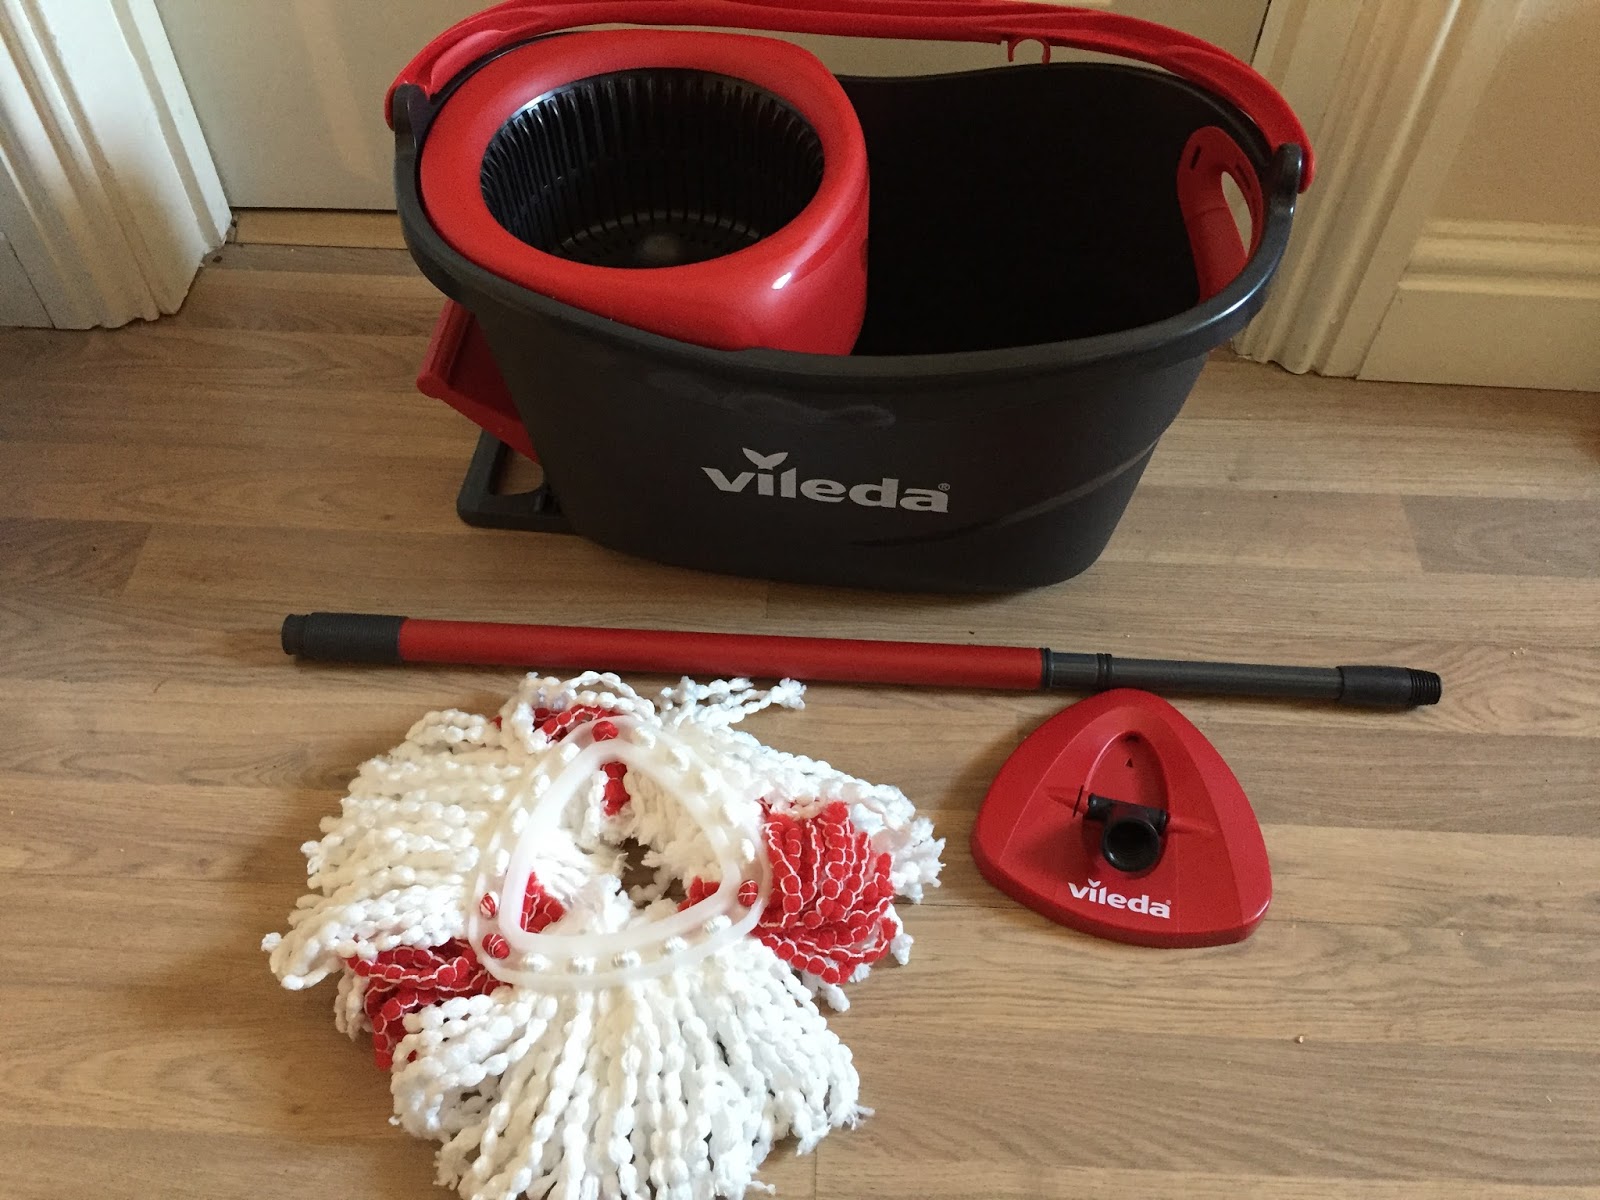 Afkorten stoel breedte Vileda Easy Wring Clean Turbo mop and bucket (review) - Steph's Two Girls